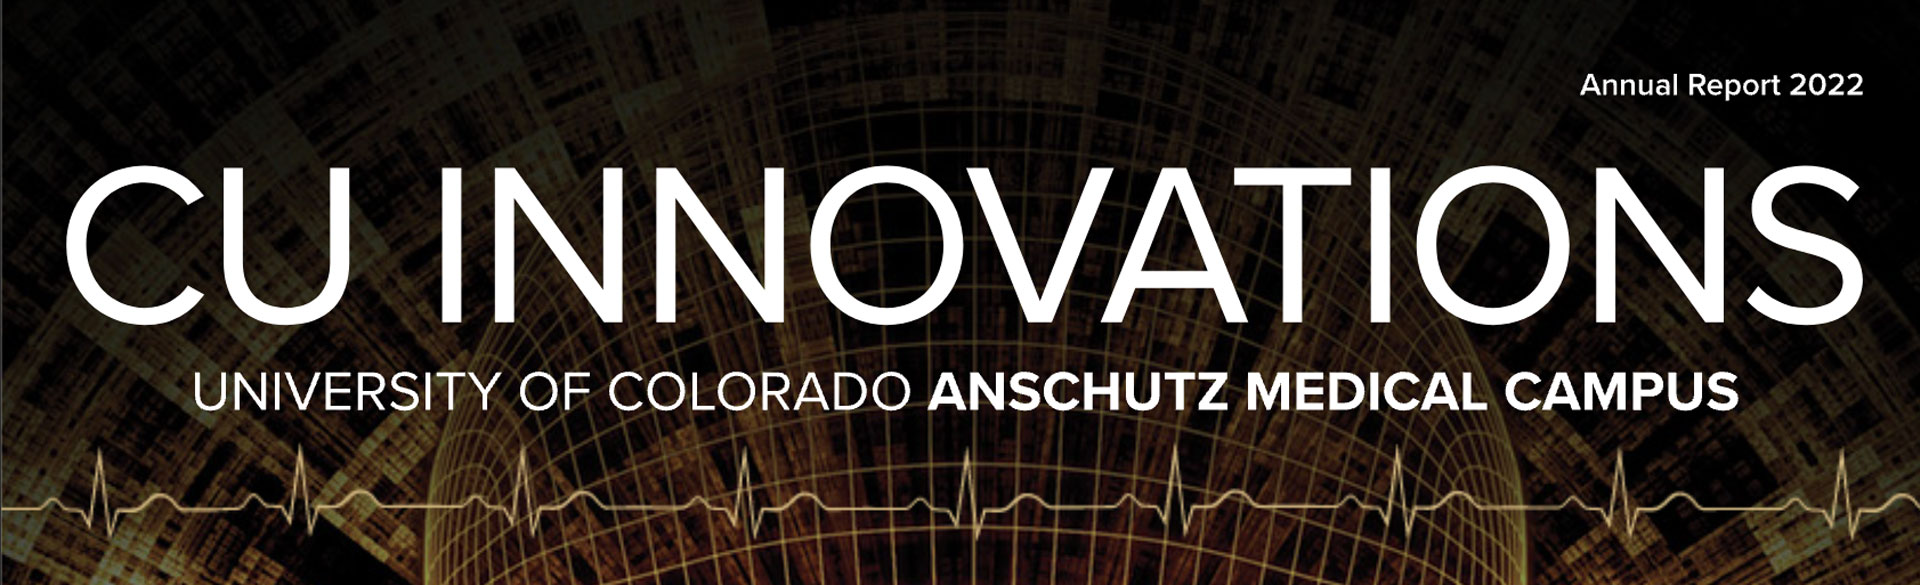 CU Innovations University of Colorado Anschutz Medical Campus | Annual Report 2022